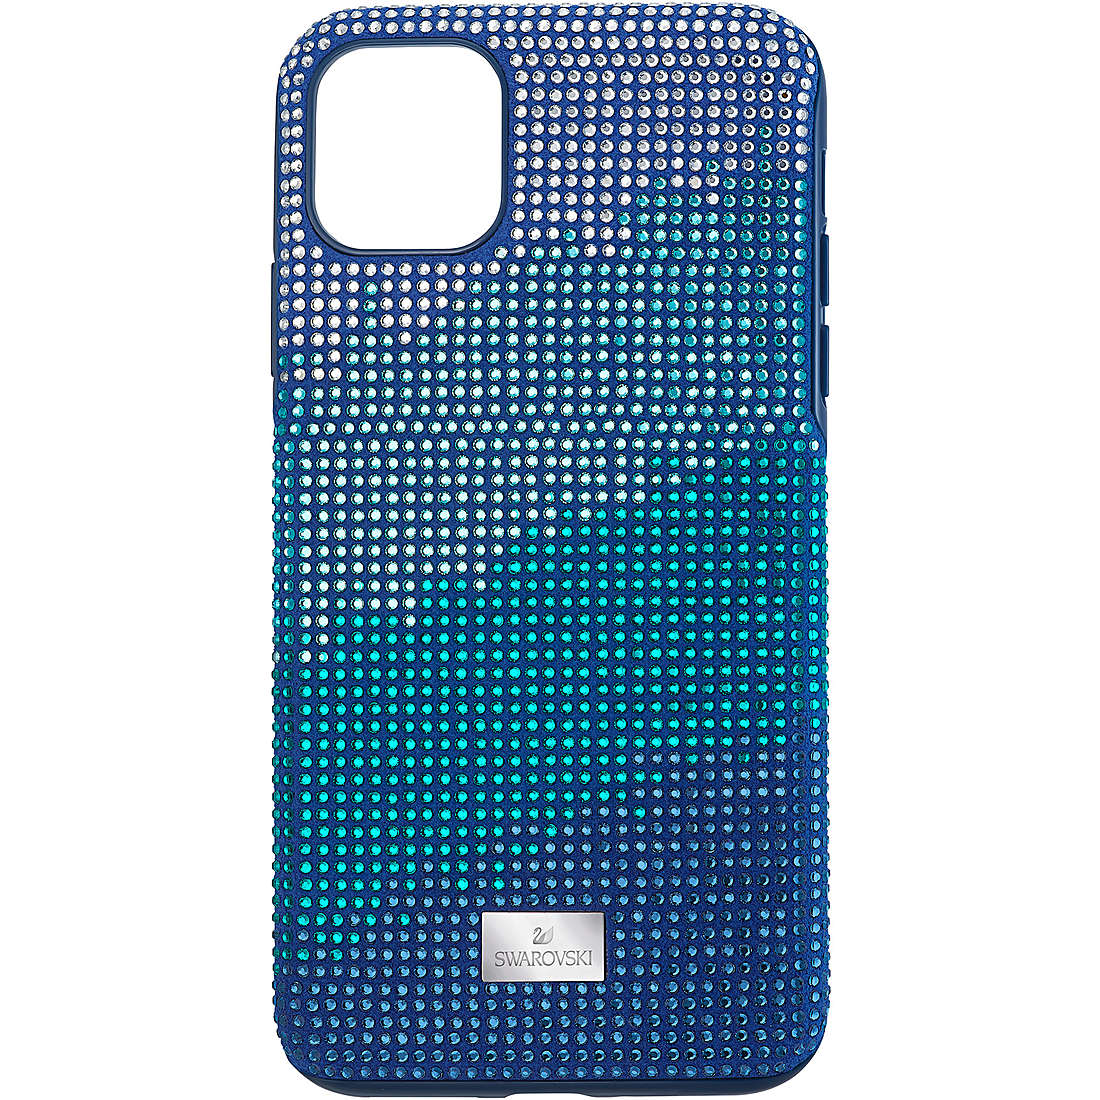 Smartphone-Cover Swarovski Crystalgram 5533965